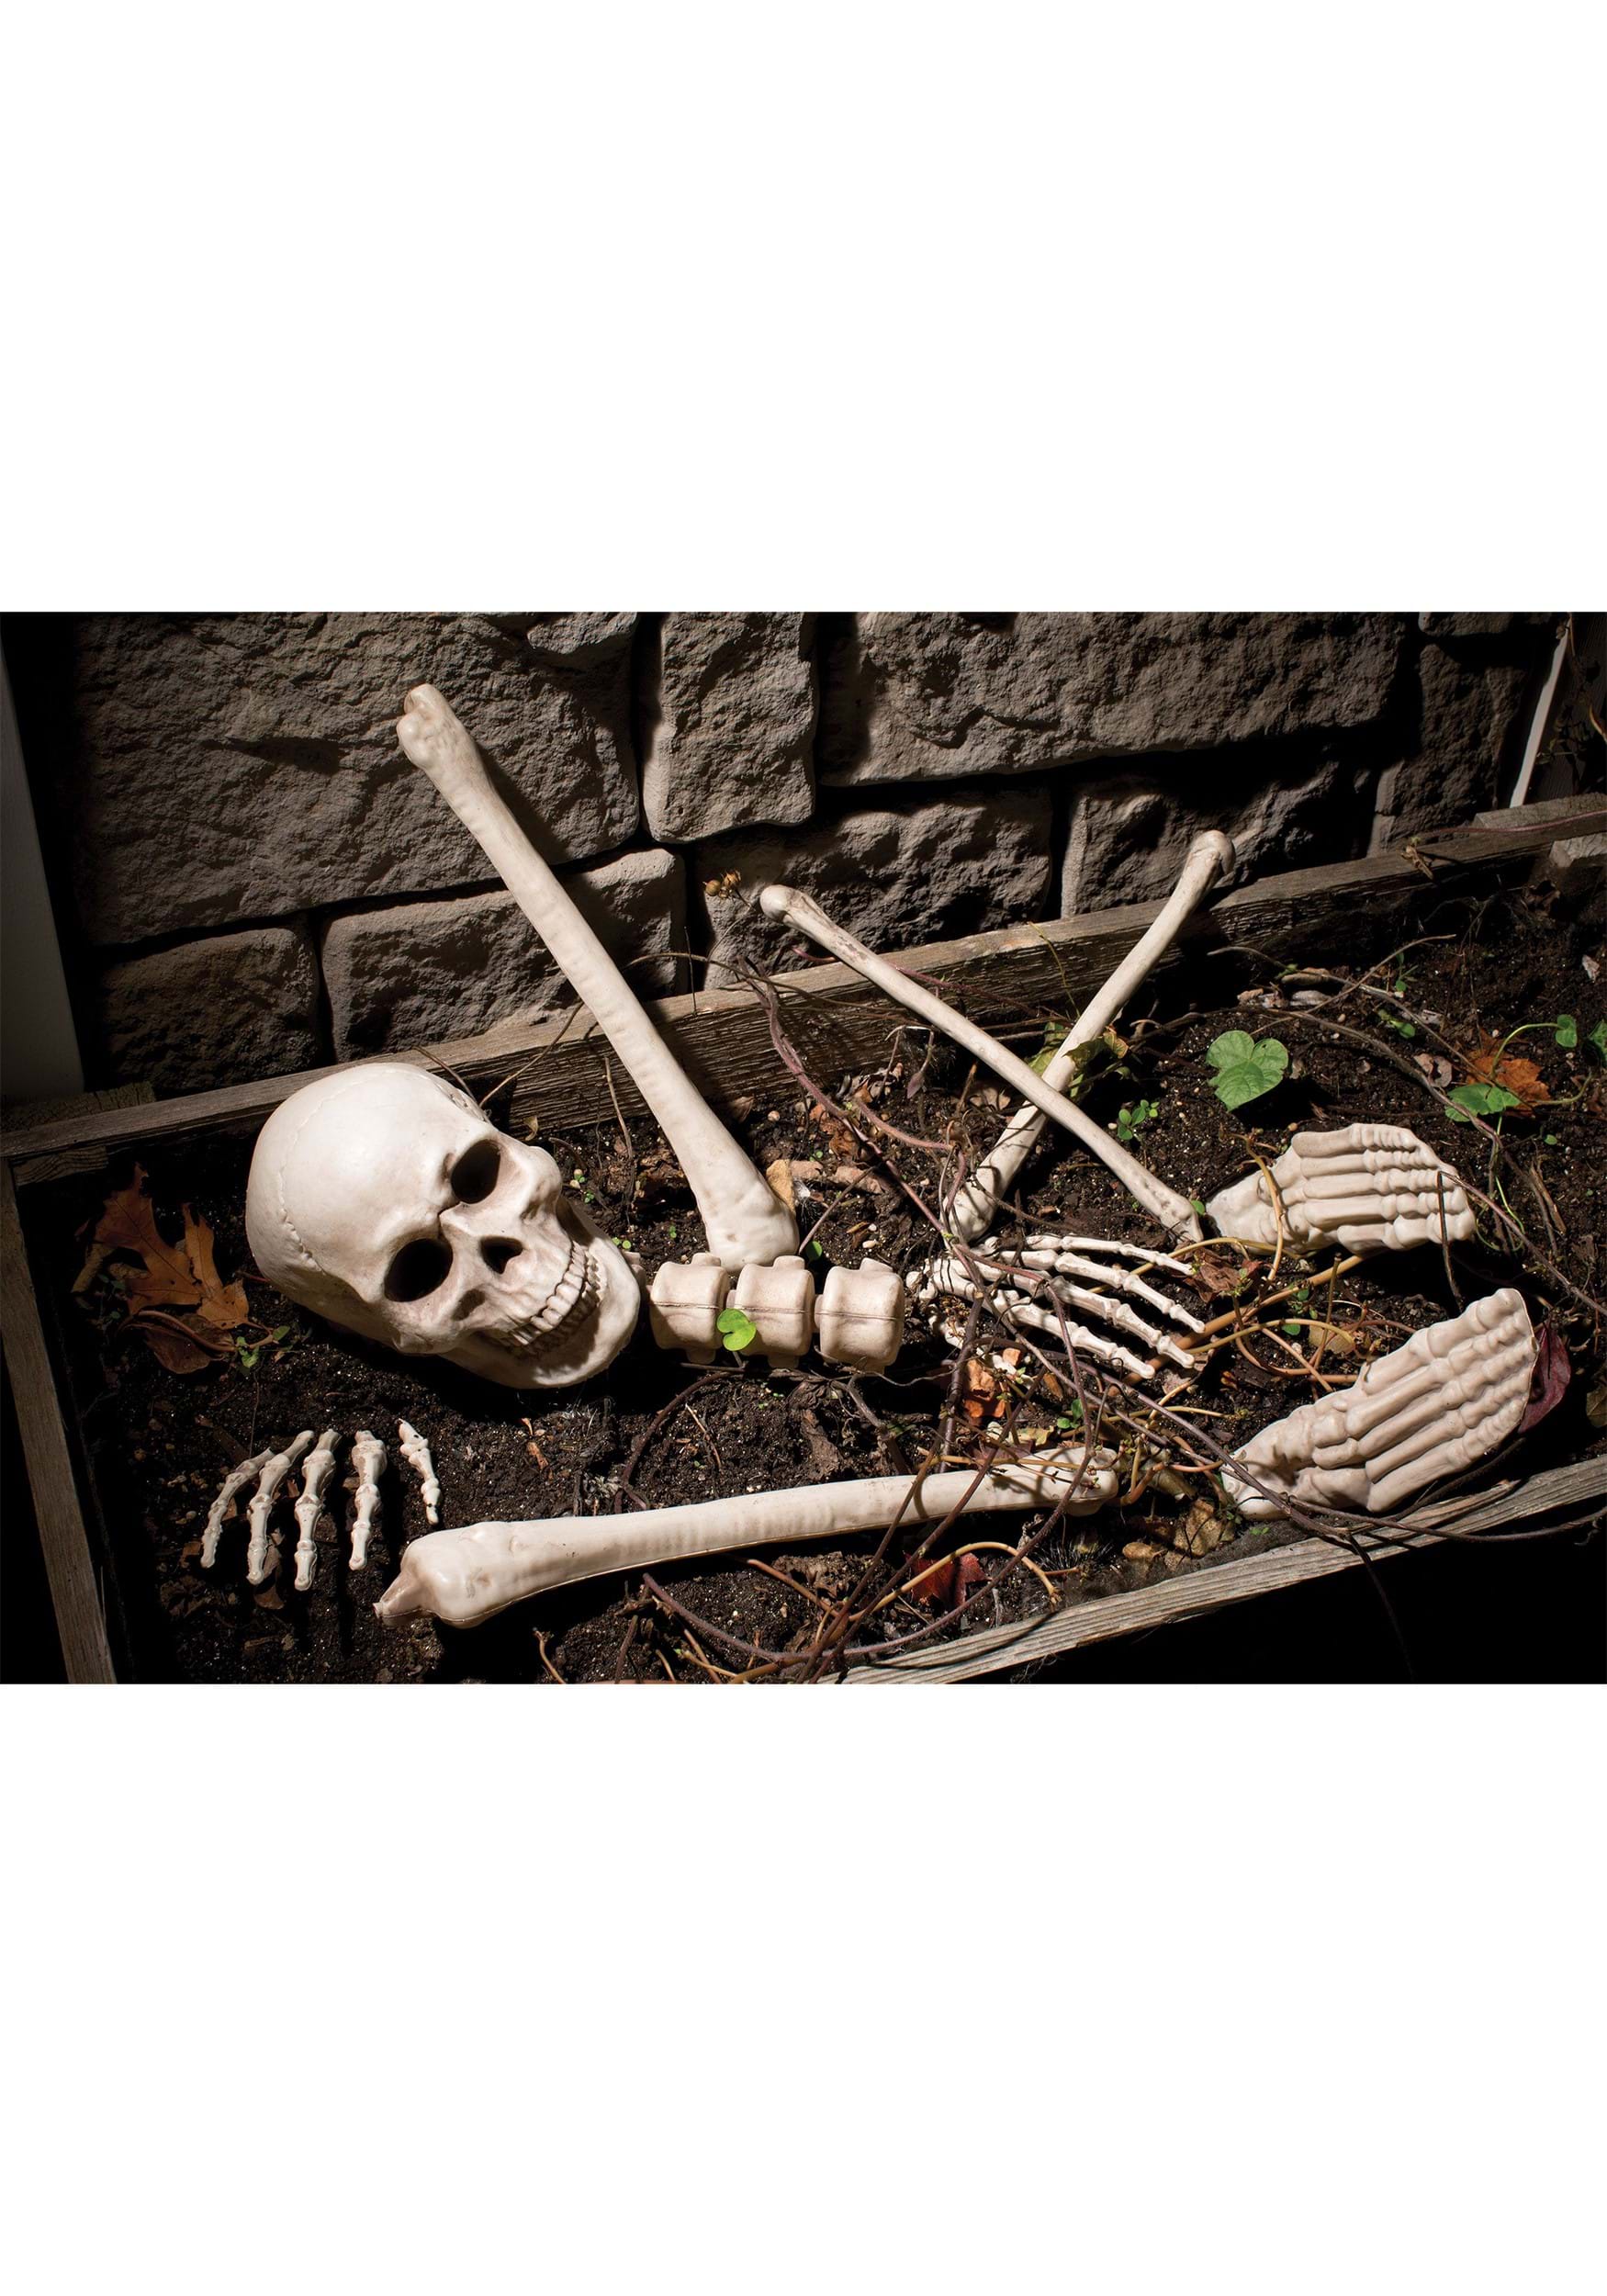 Bag O\' Bones Halloween Decorations